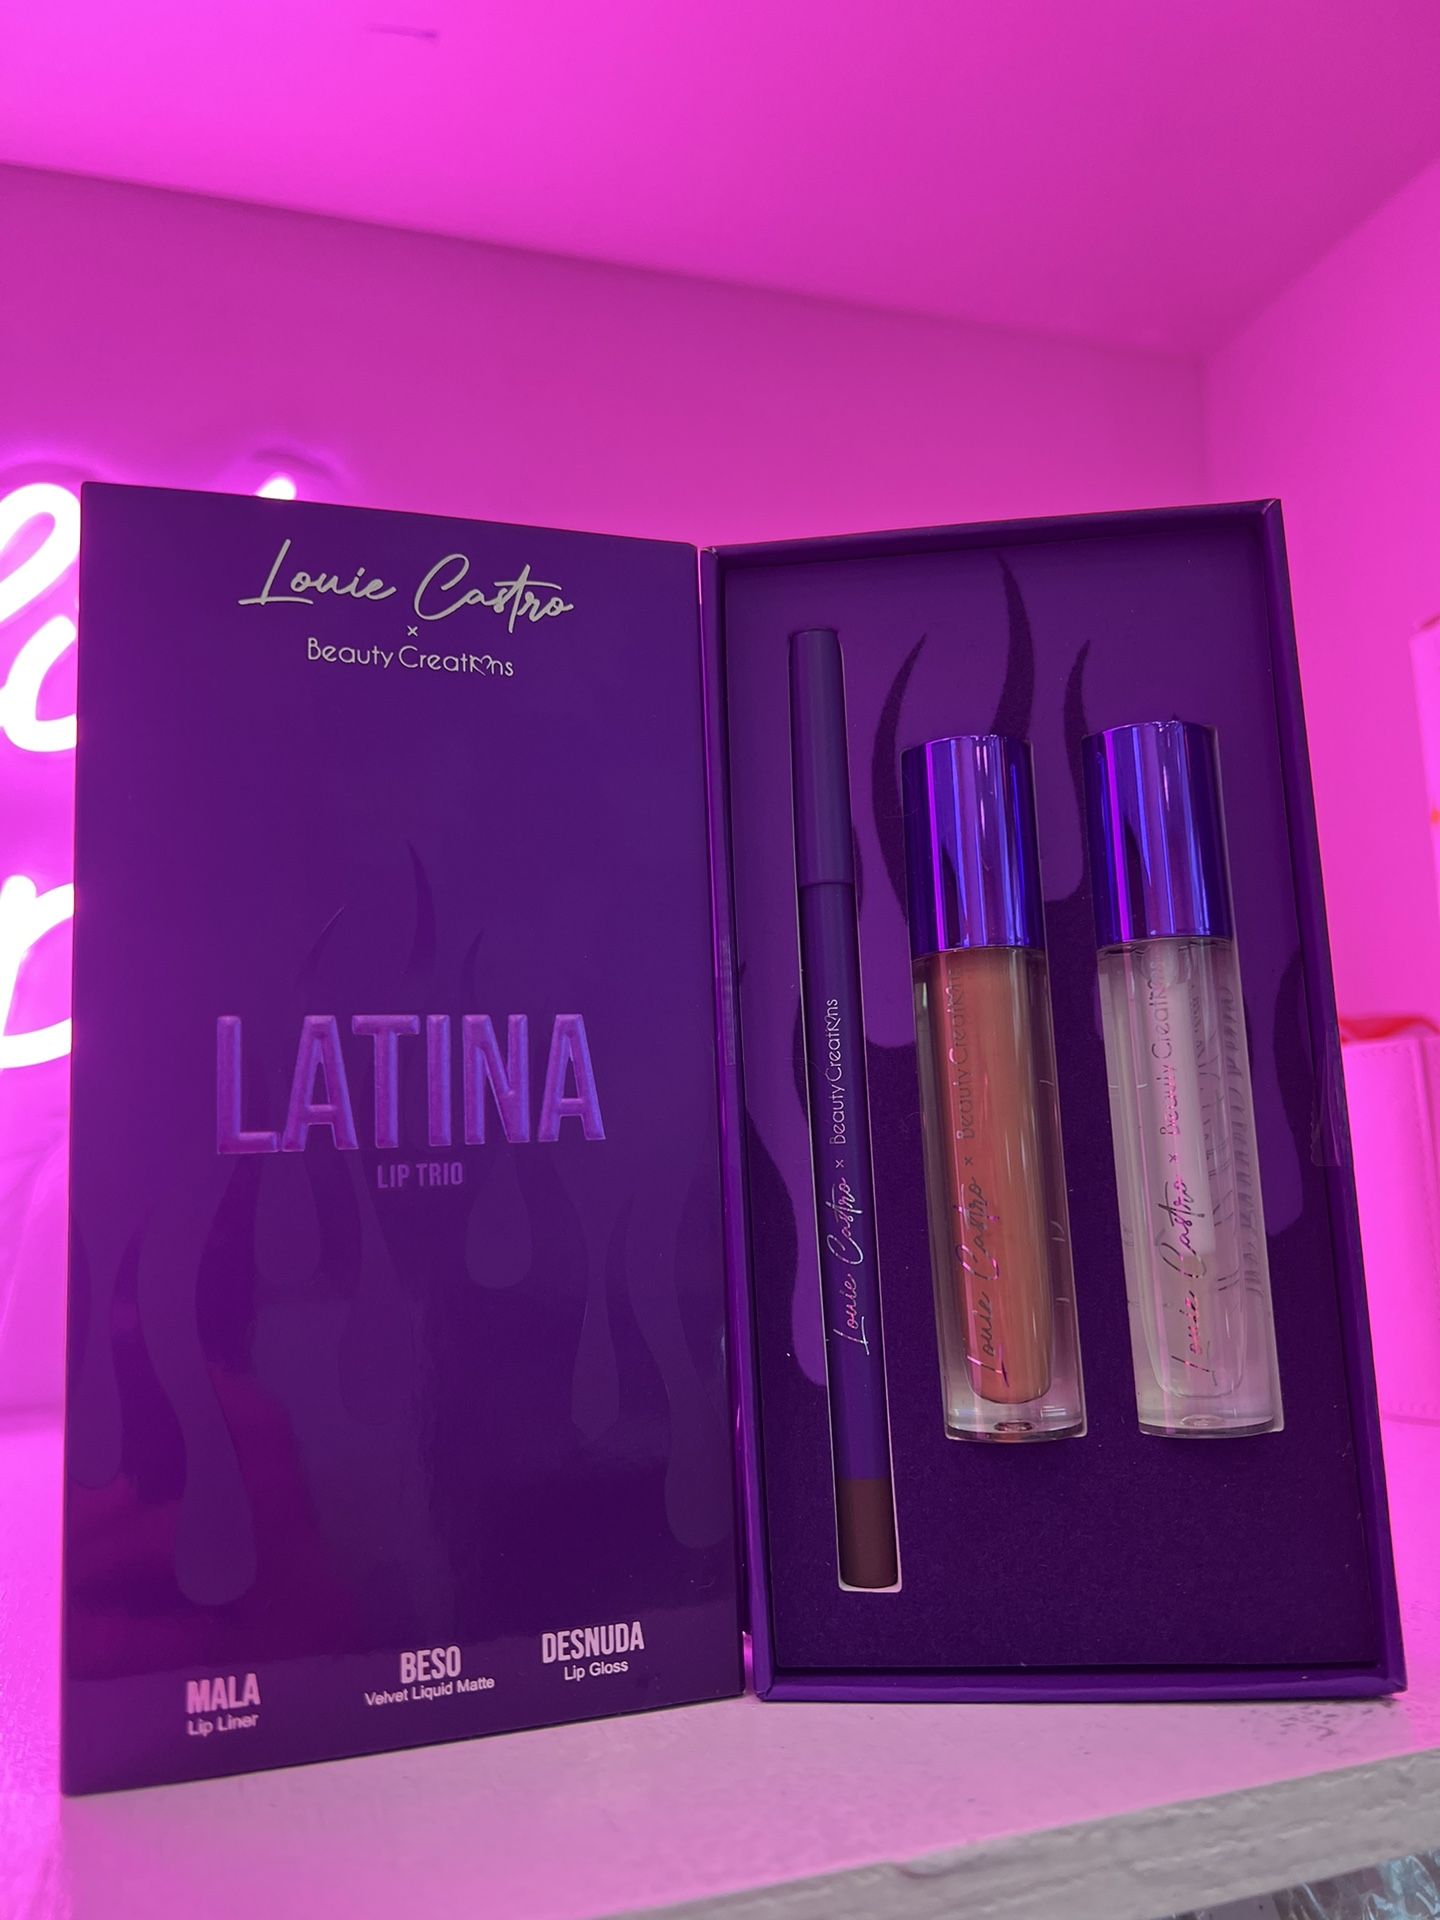 Louie Castro x Beauty Creations Latina Lip Trio